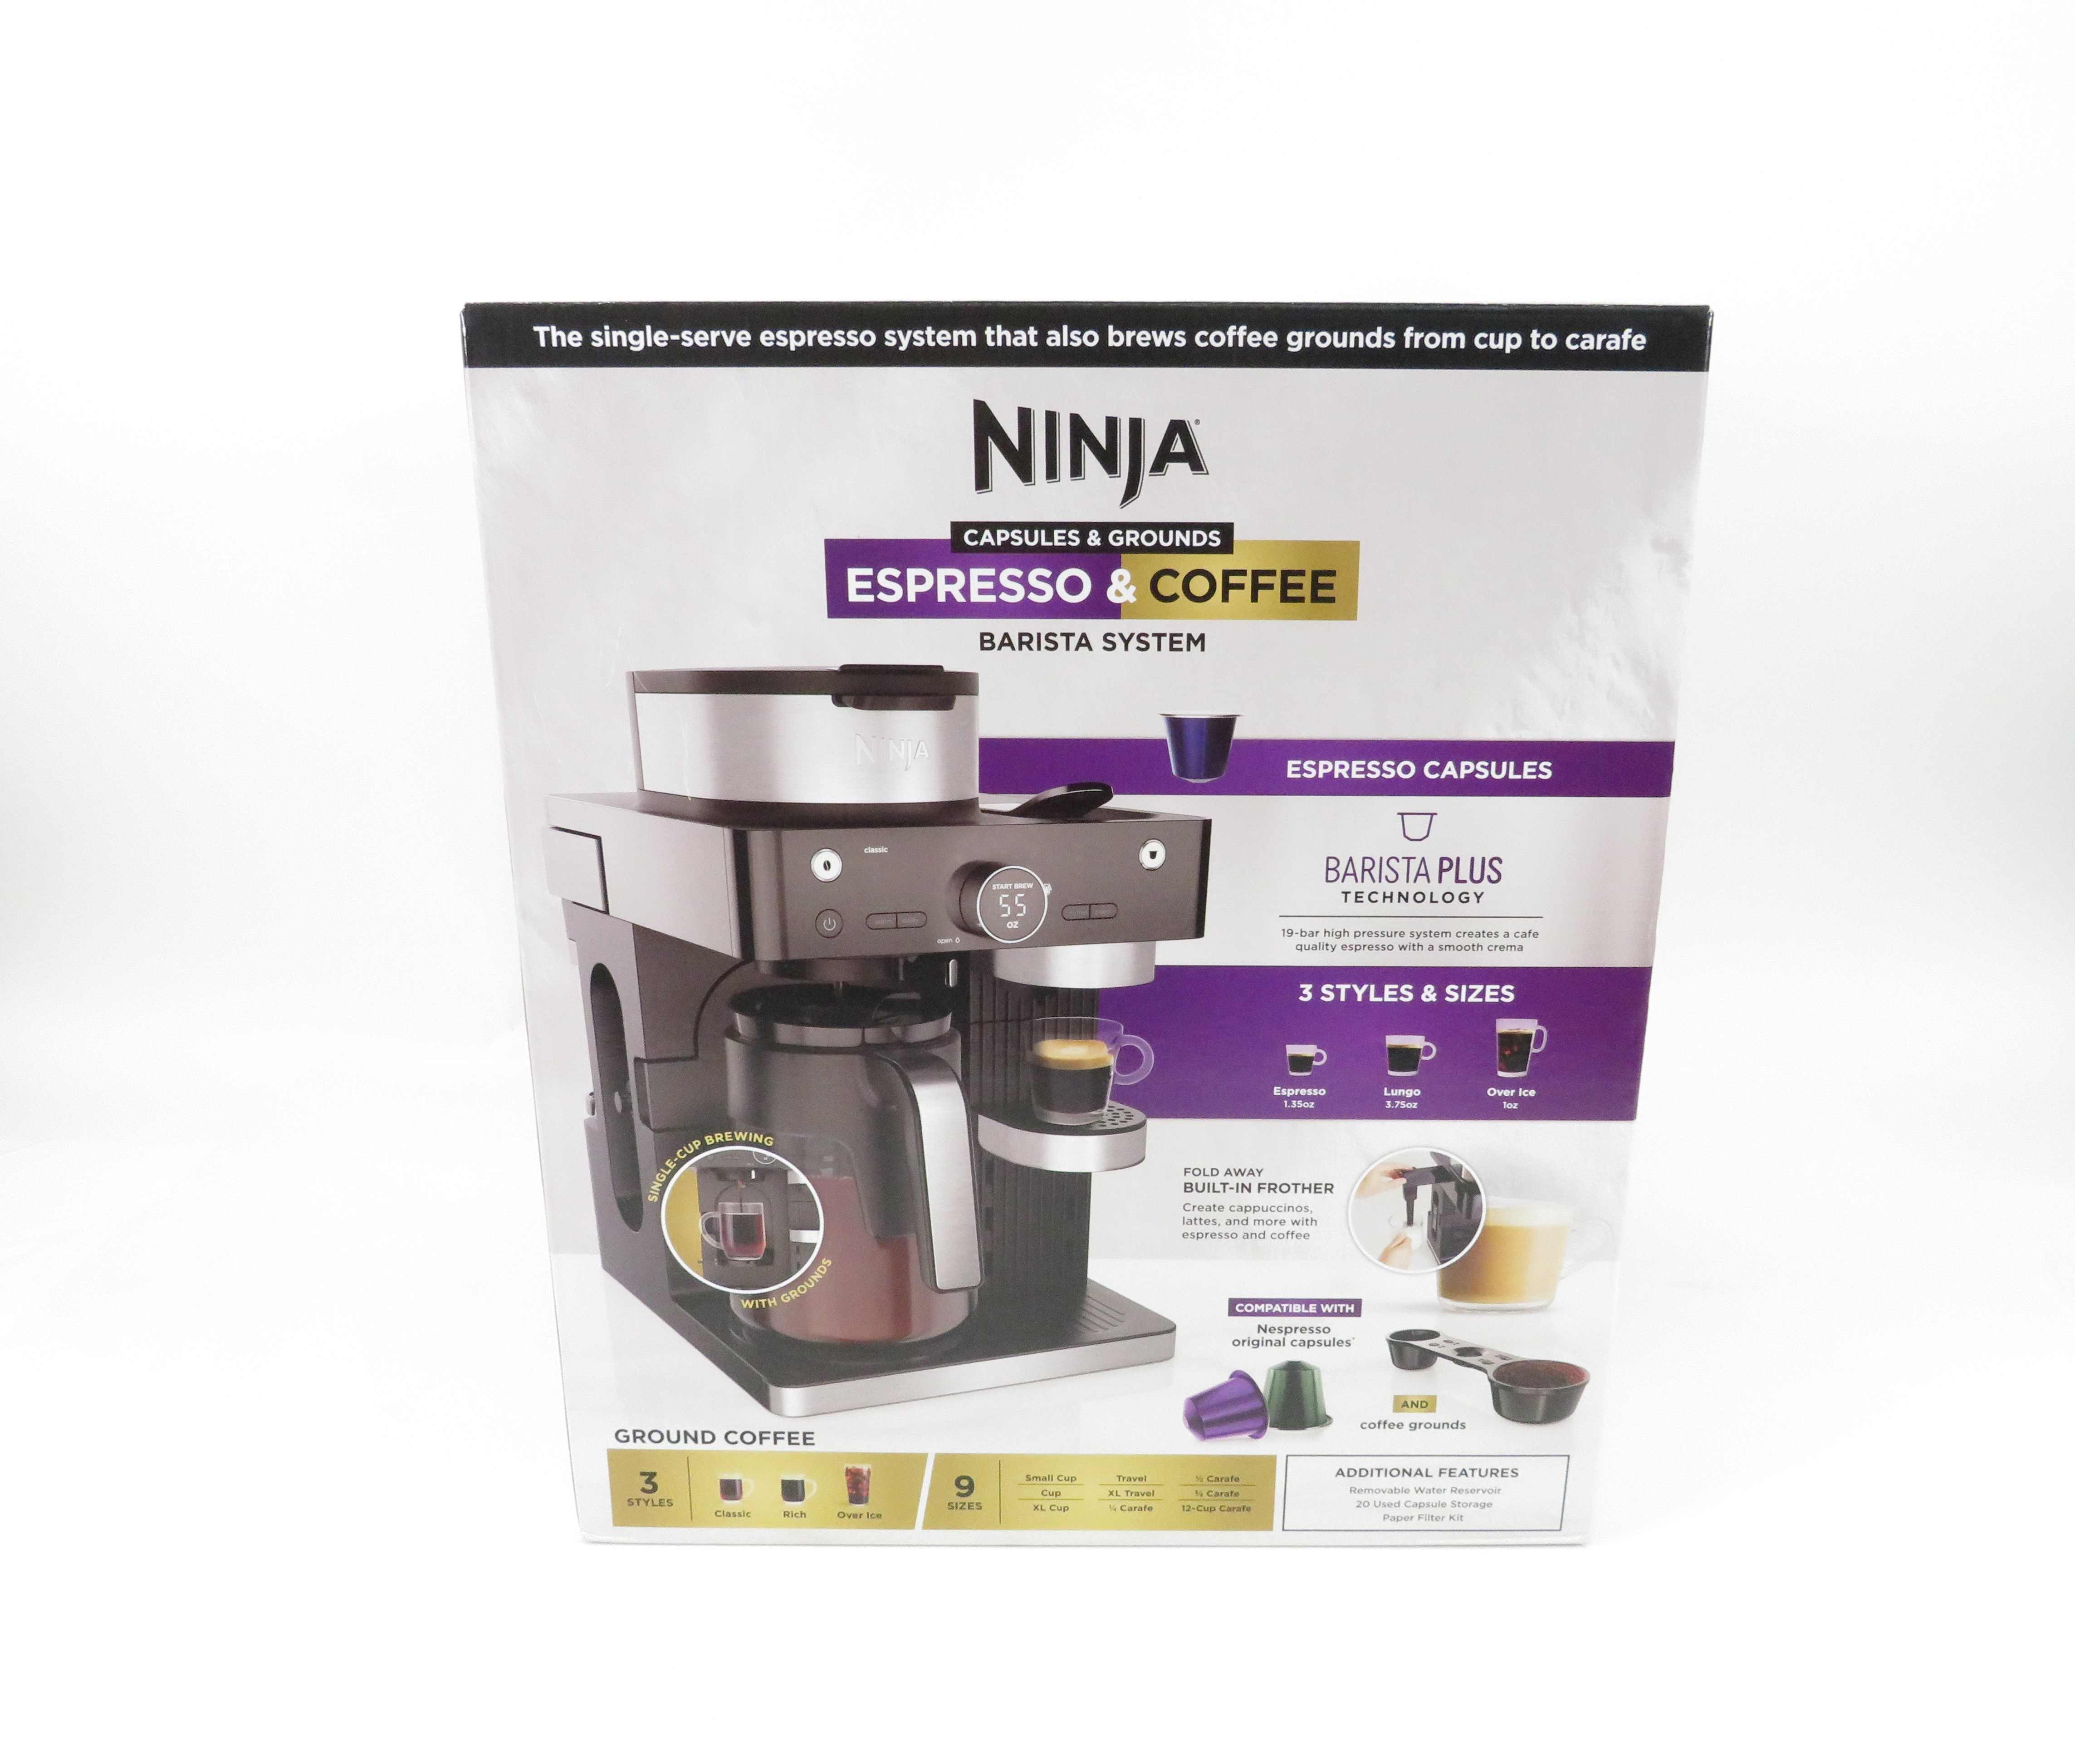 Ninja CFN601 Espresso & Coffee Barista System, Ninja CFN601 Espresso, Ninja Coffee Maker